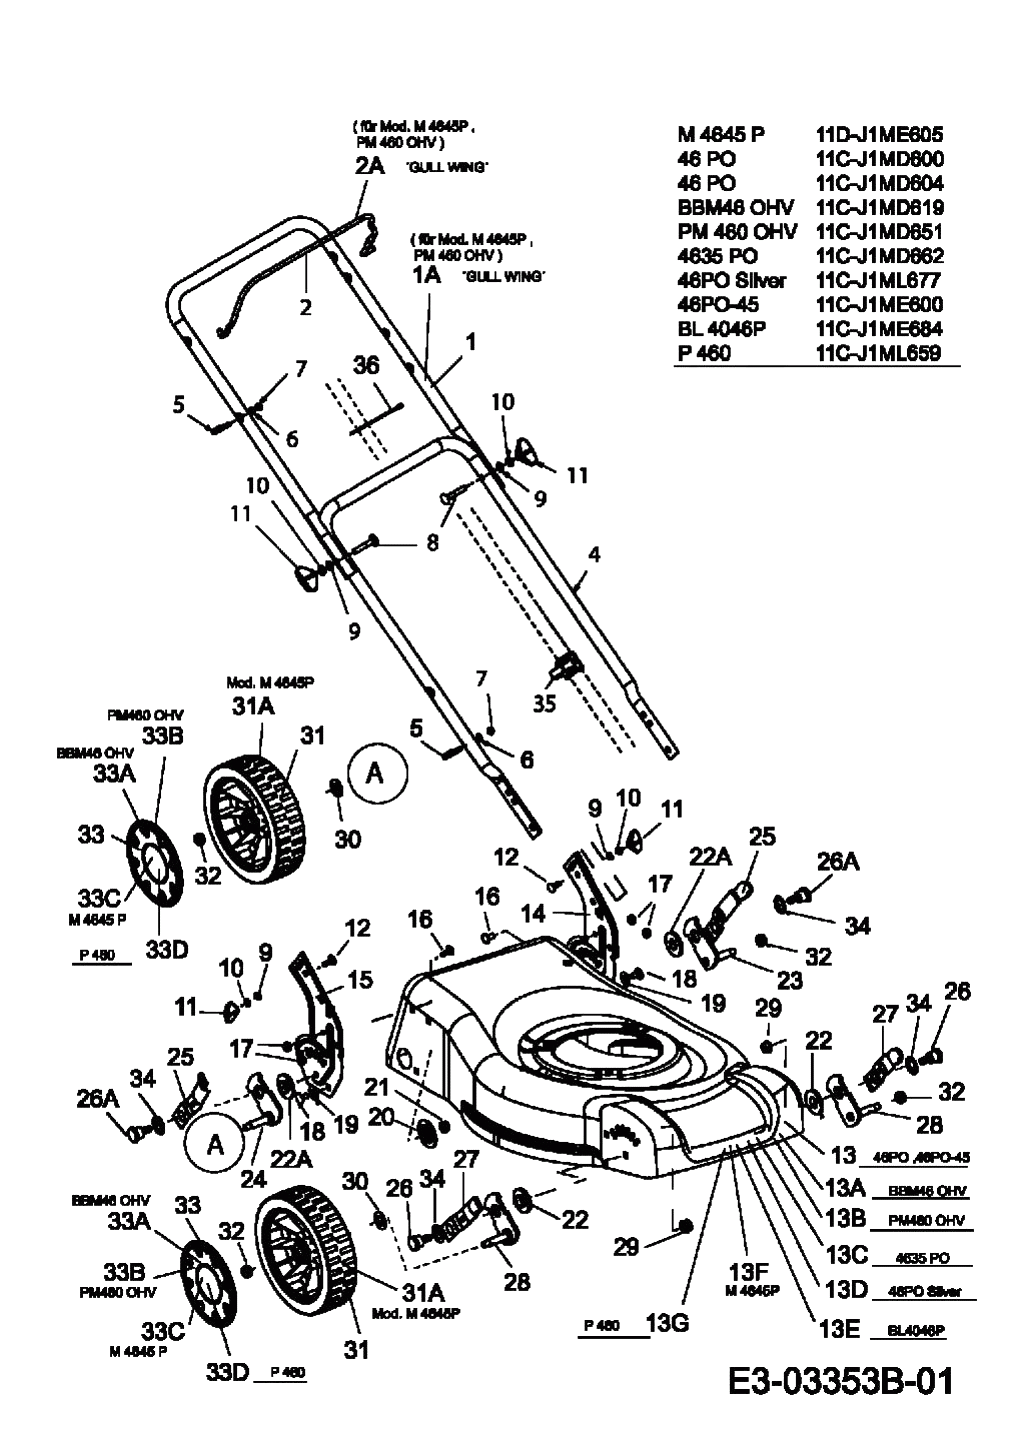 MTD Артикул 11C-J1MD600 (год выпуска 2008). Ручка, колеса, регулятор высоты реза